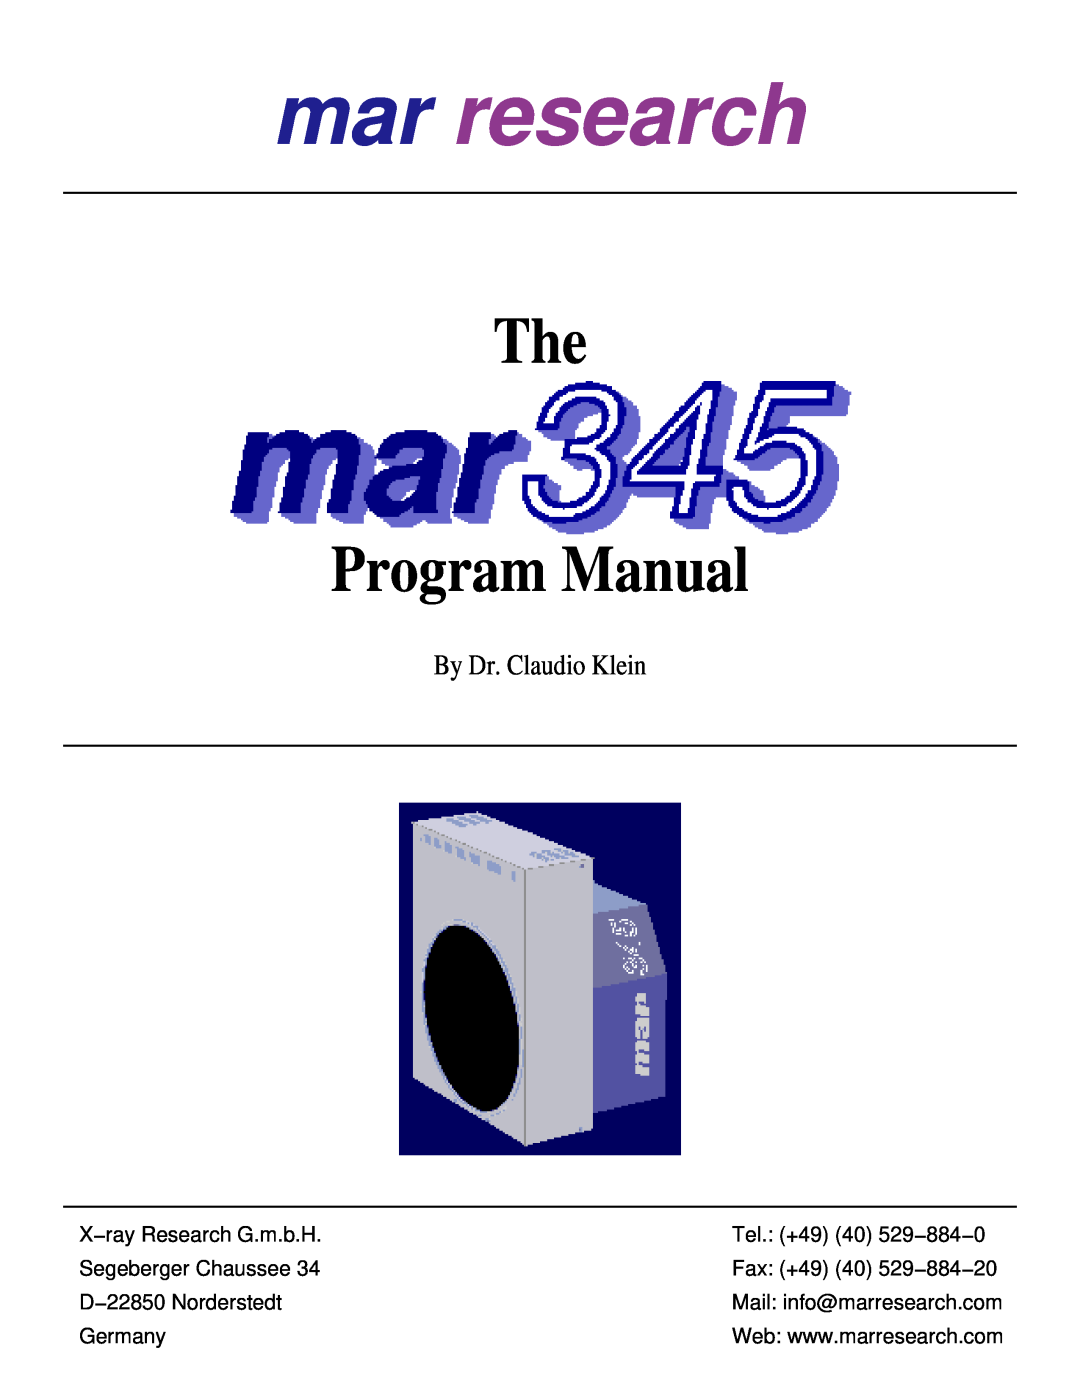 Compaq mar345 manual mar research, The Program Manual, By Dr. Claudio Klein, X−ray Research G.m.b.H, Tel. +49 40 529−884−0 